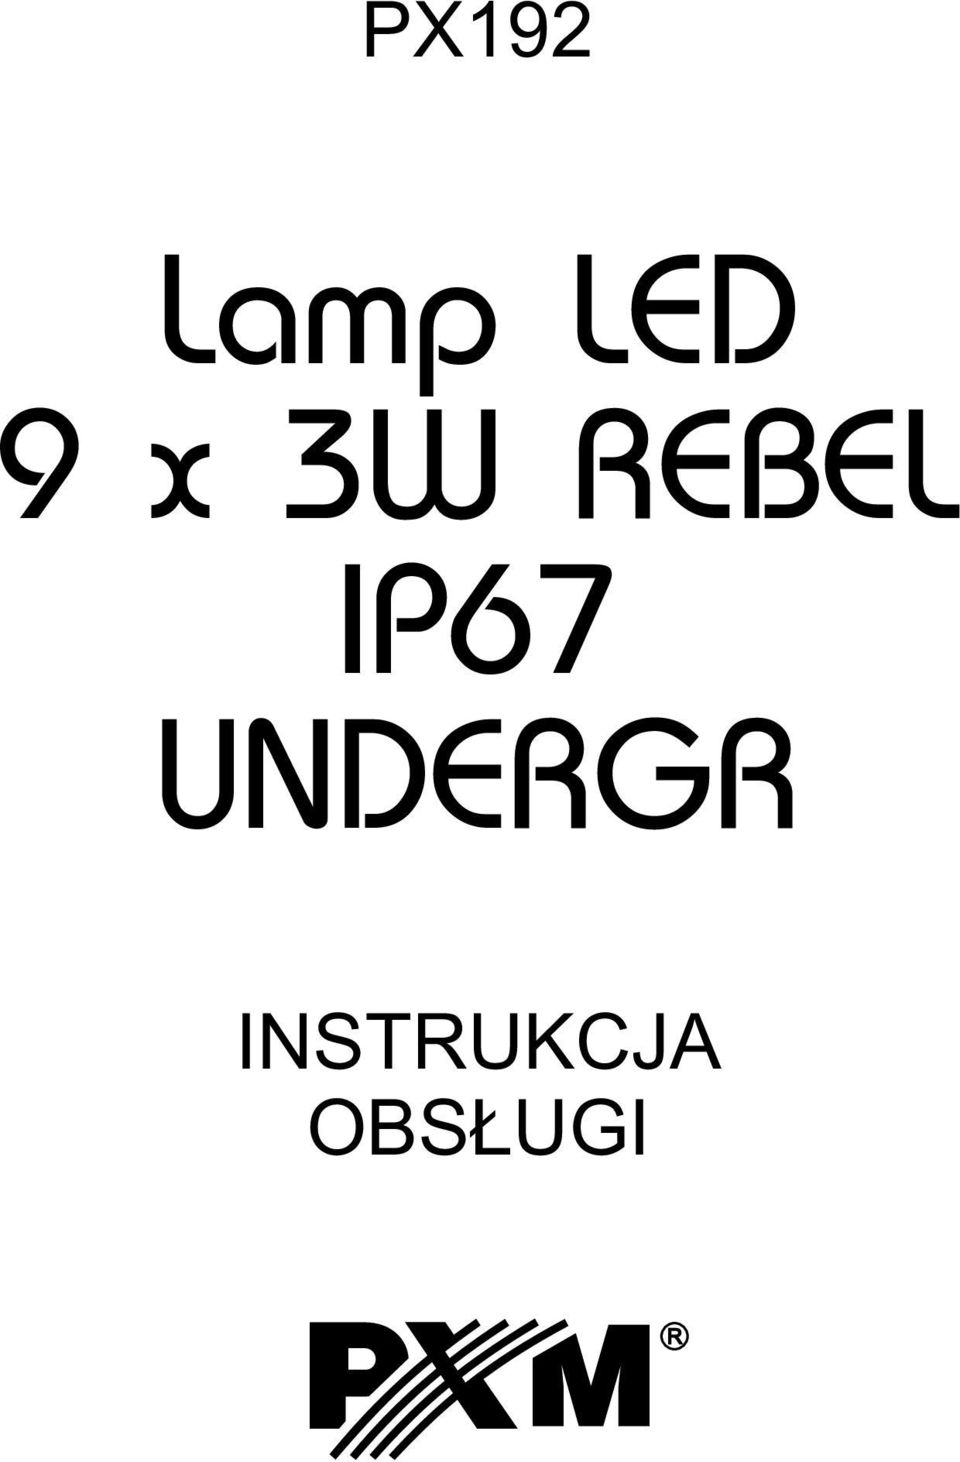 IP67 UNDERGR